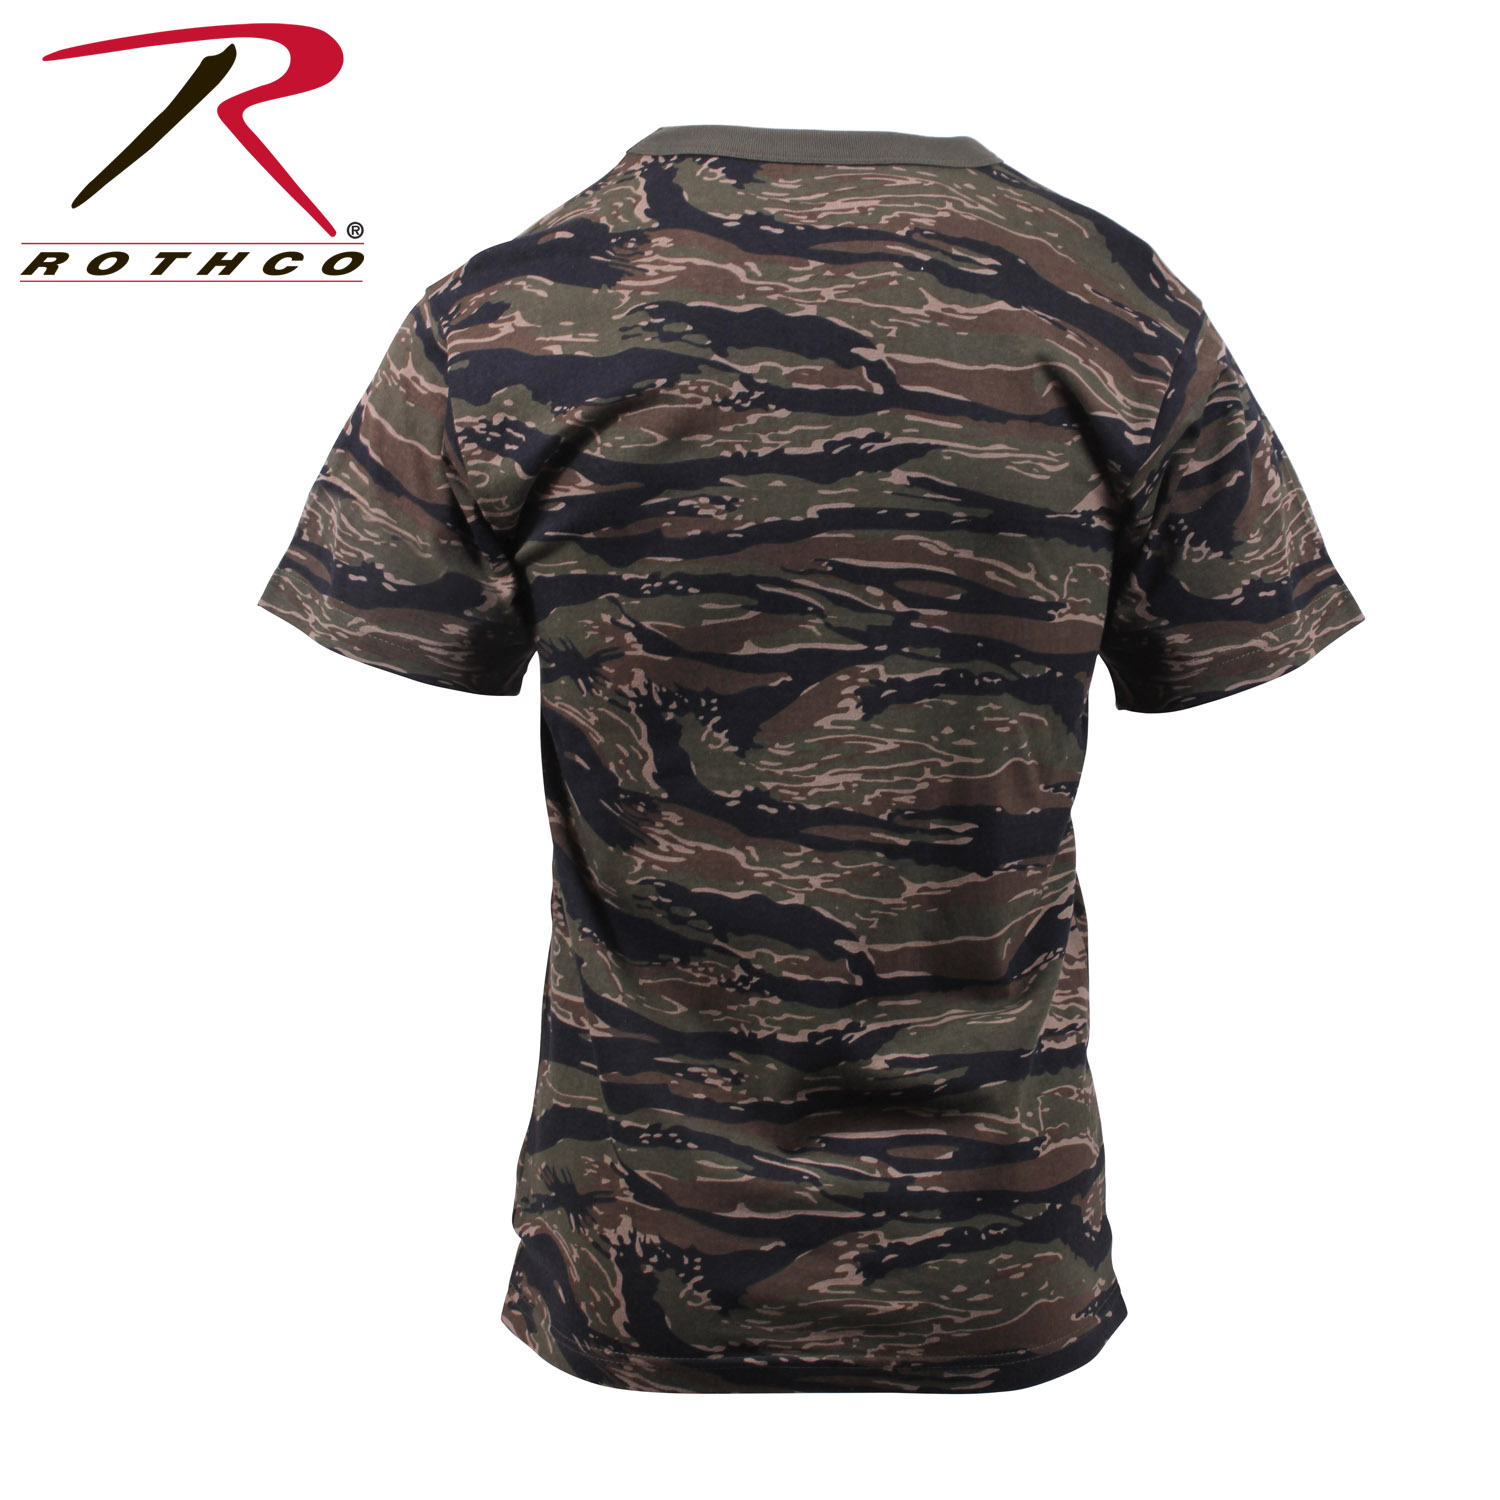 Rothco 6787 Tiger Stripe Camo T-Shirts - Tiger Stripe Camo | eBay